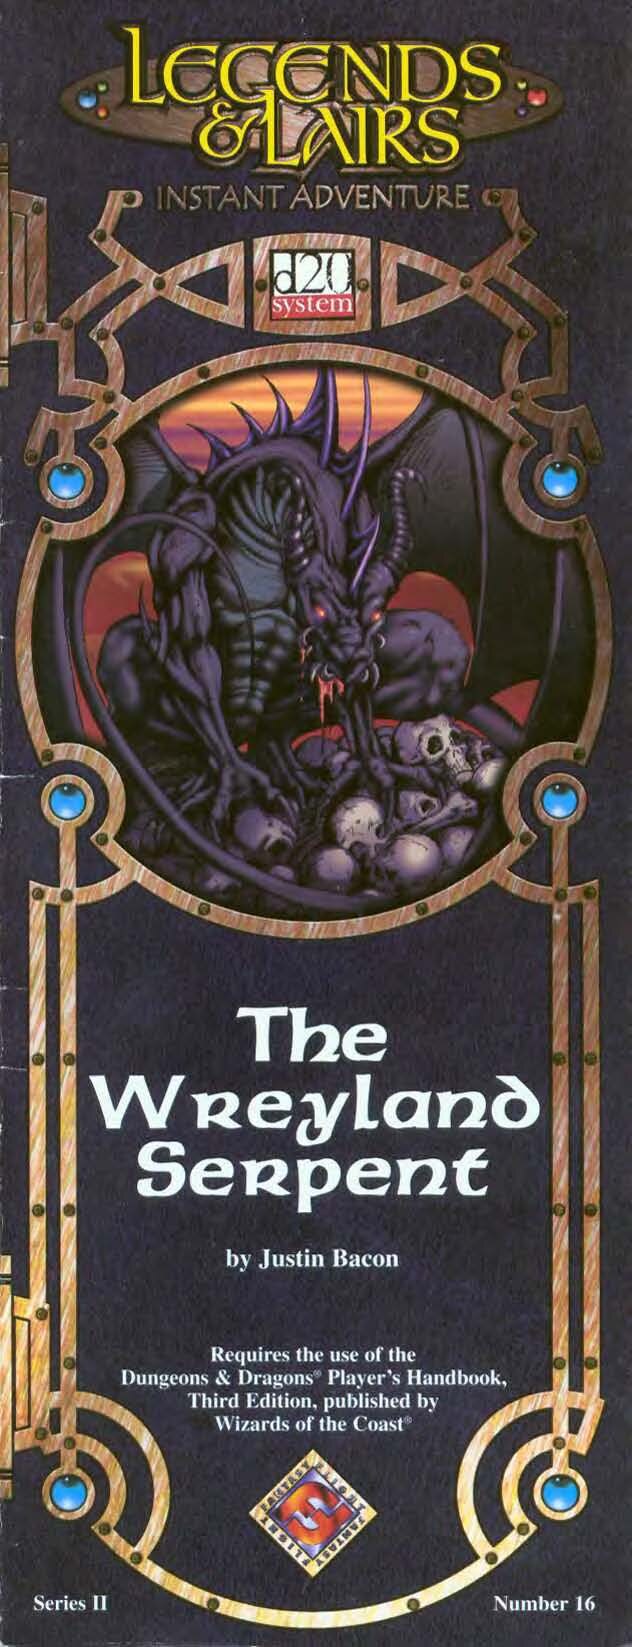 The Wreyland Serpent